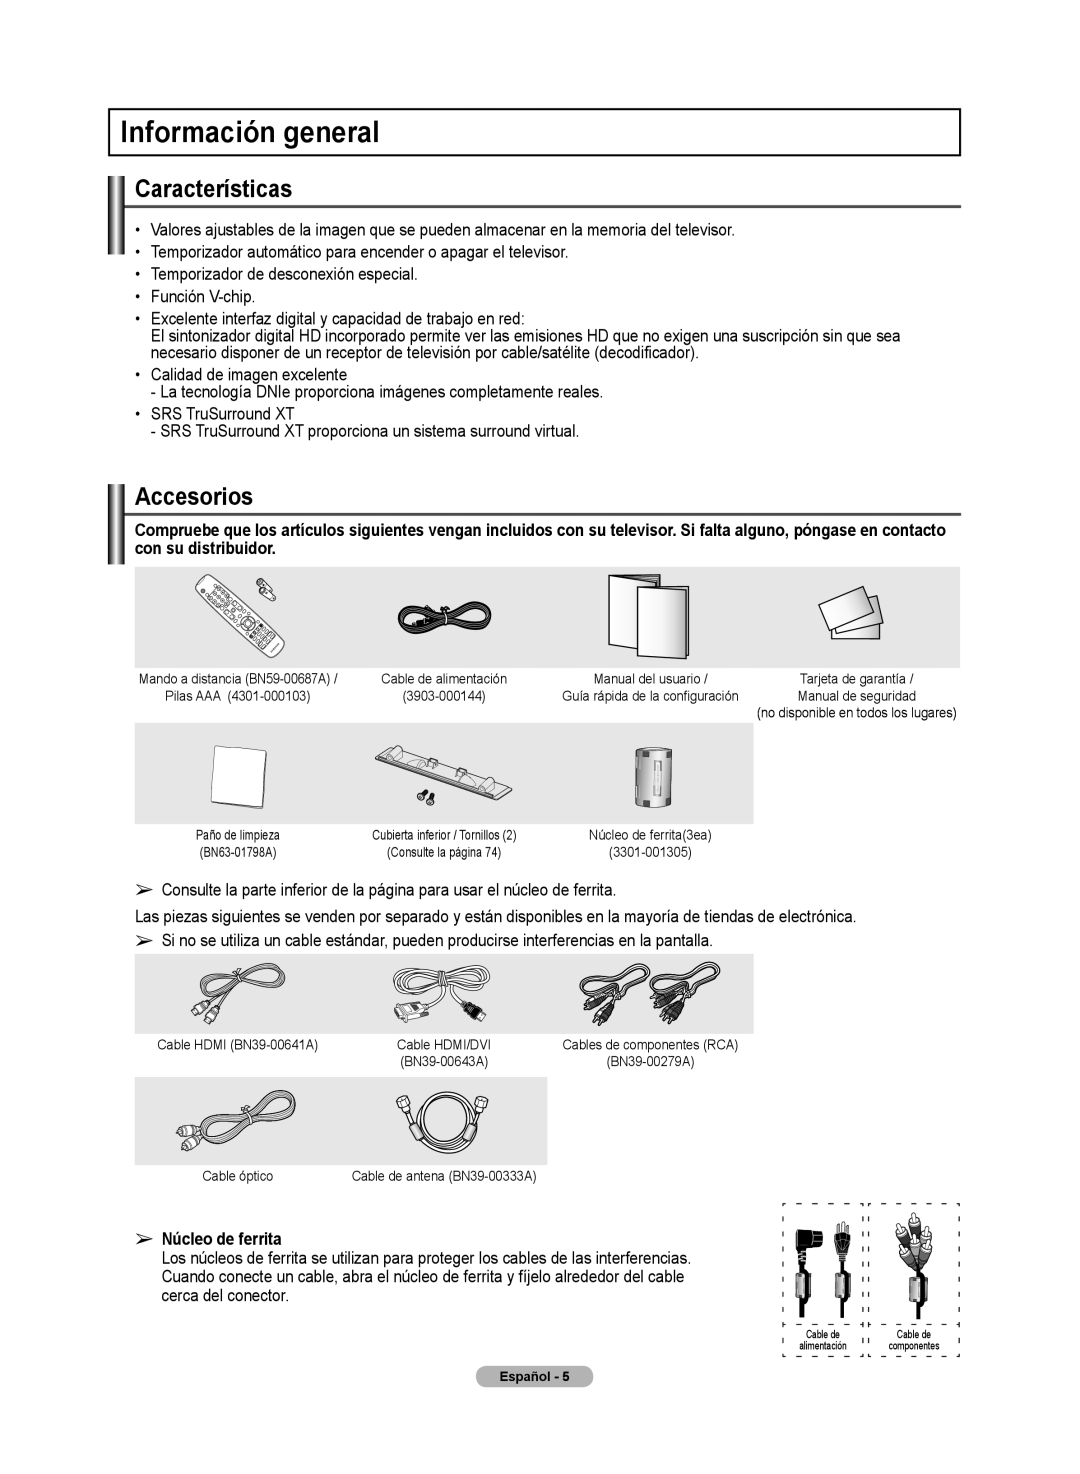 Samsung 510 user manual Información general, Características, Accesorios, Núcleo de ferrita 